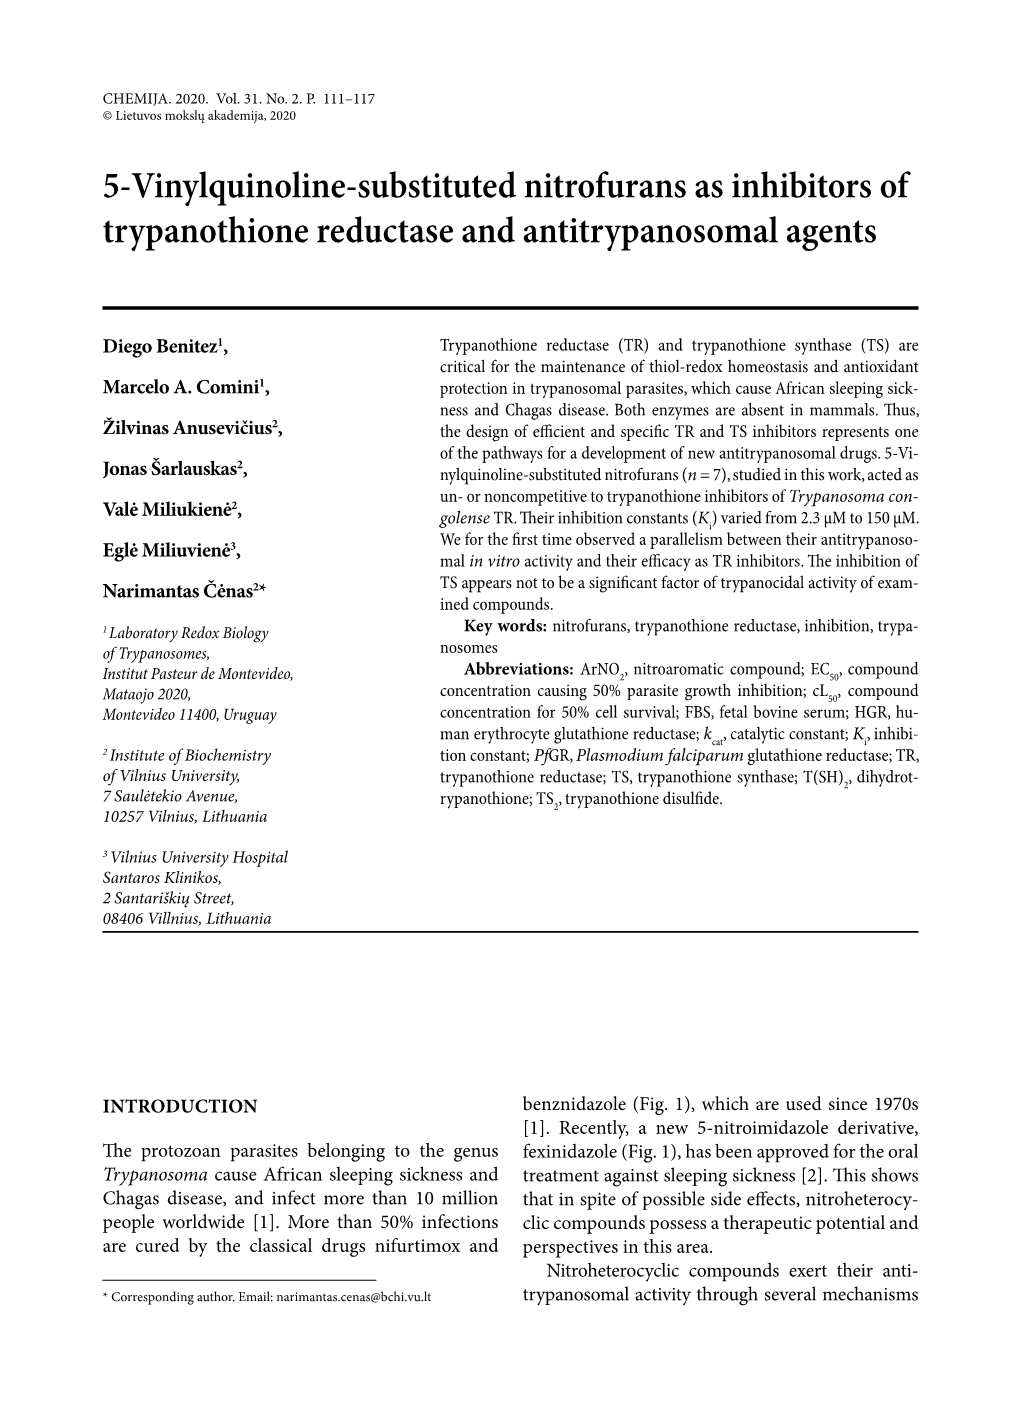 5-Vinylquinoline-Substituted Nitrofurans As Inhibitors of Trypanothione Reductase and Antitrypanosomal Agents